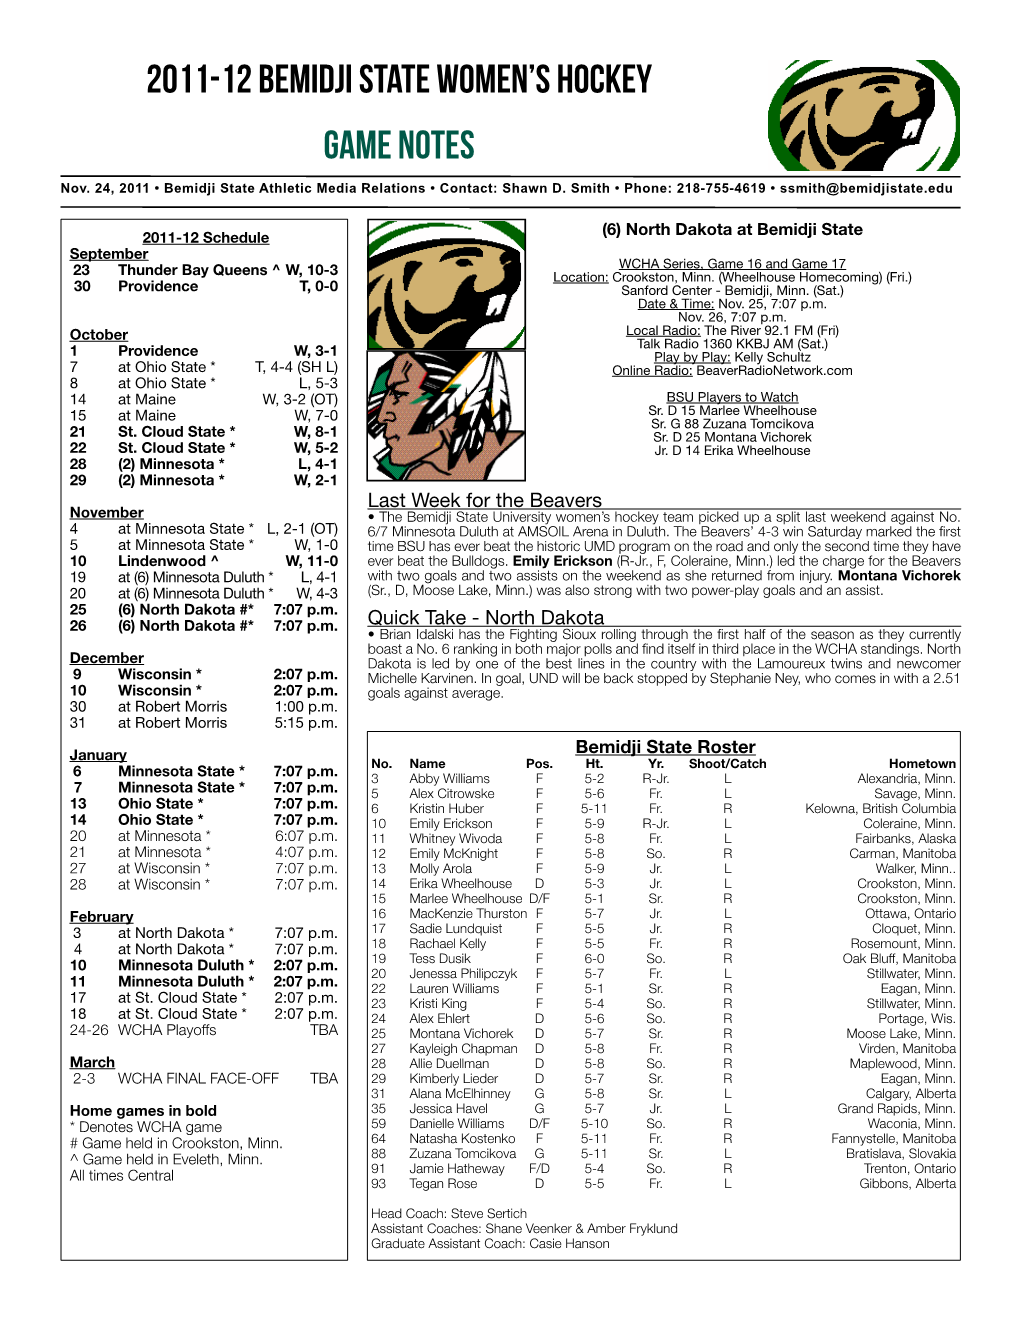 2011-12 Bemidji State Women's Hockey Game Notes